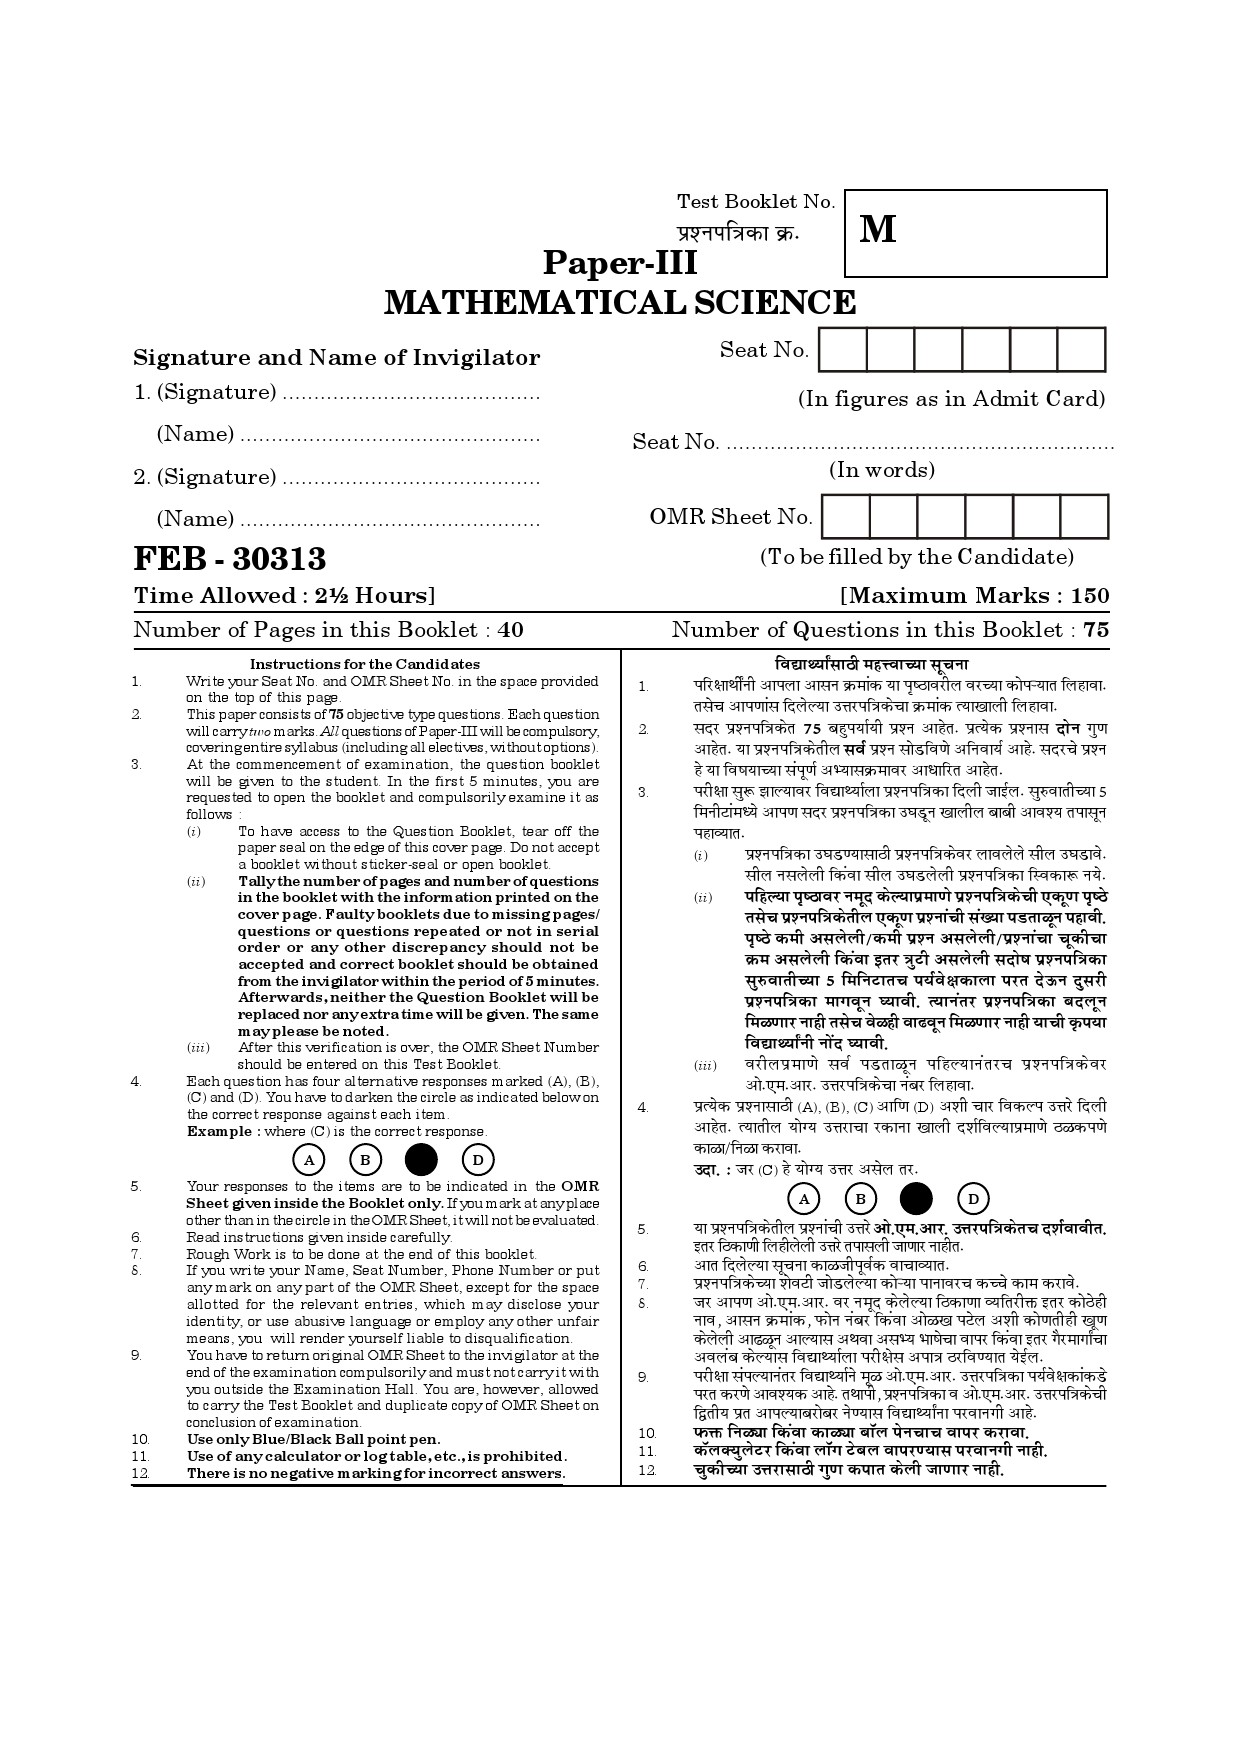 Maharashtra SET Mathematical Sciences Question Paper III February 2013 38